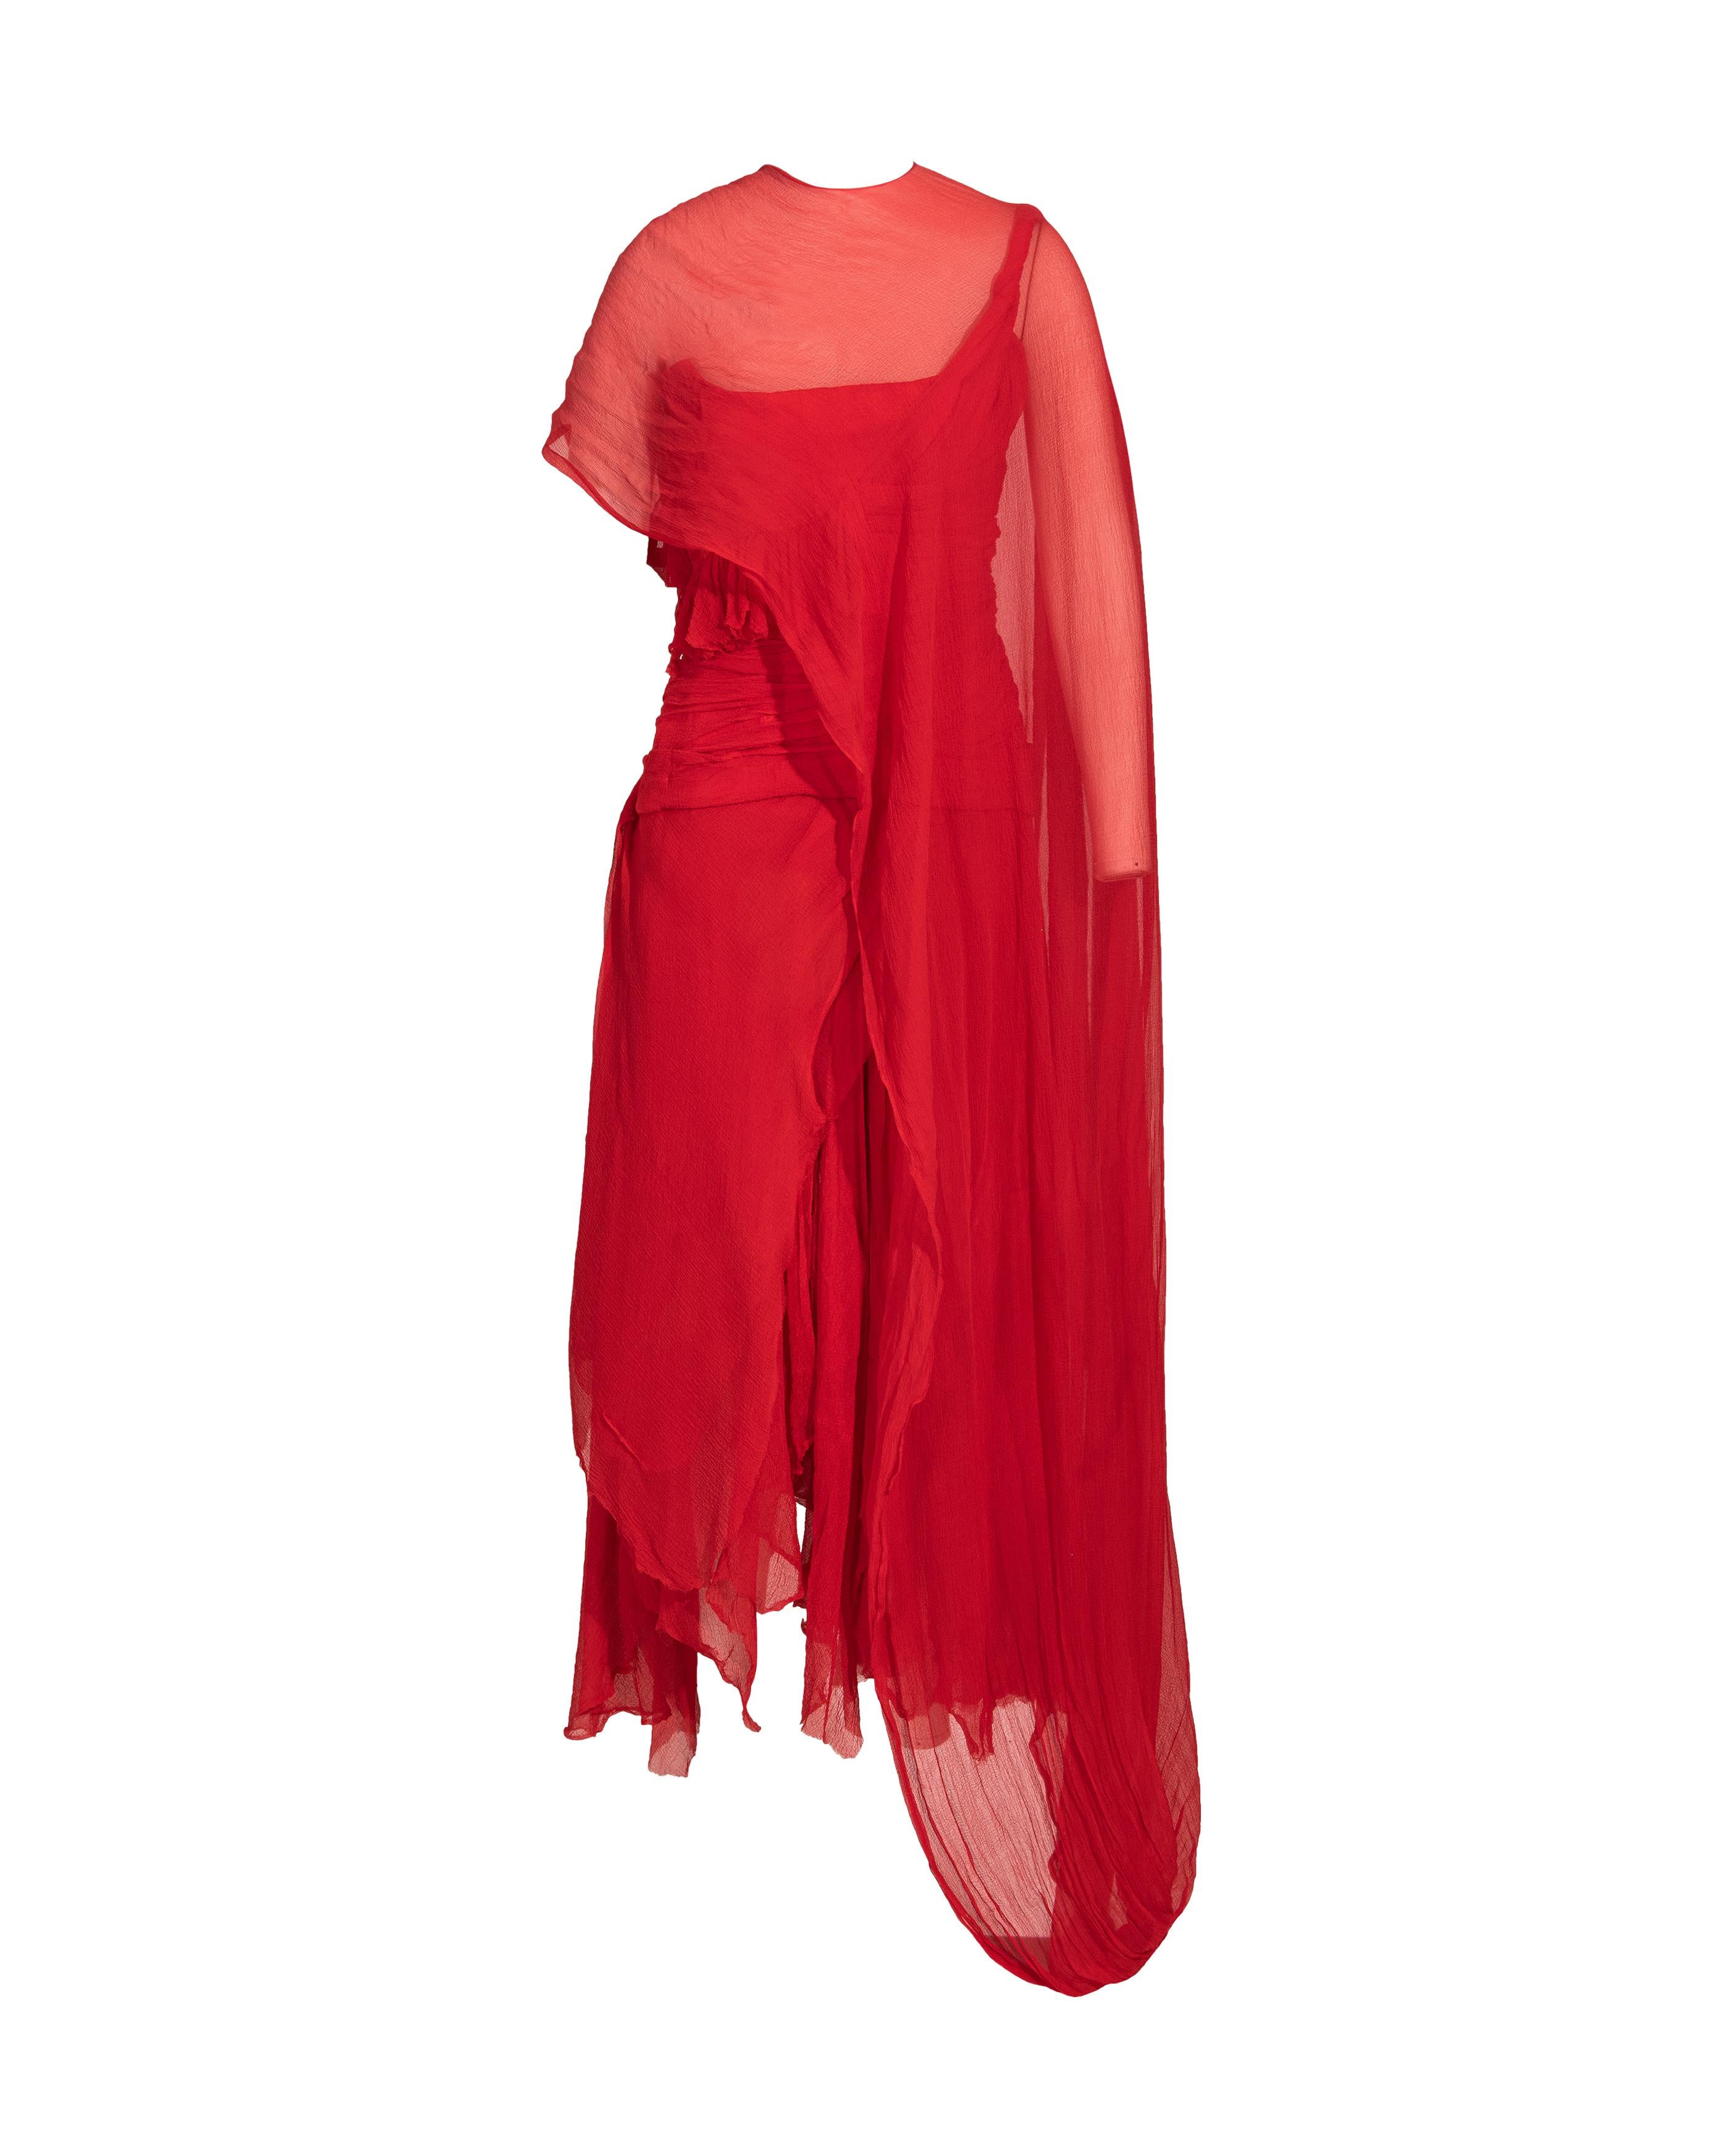 S/S 2003 Alexander McQueen  The Collective Robe en mousseline de soie rouge avec ceinture 8